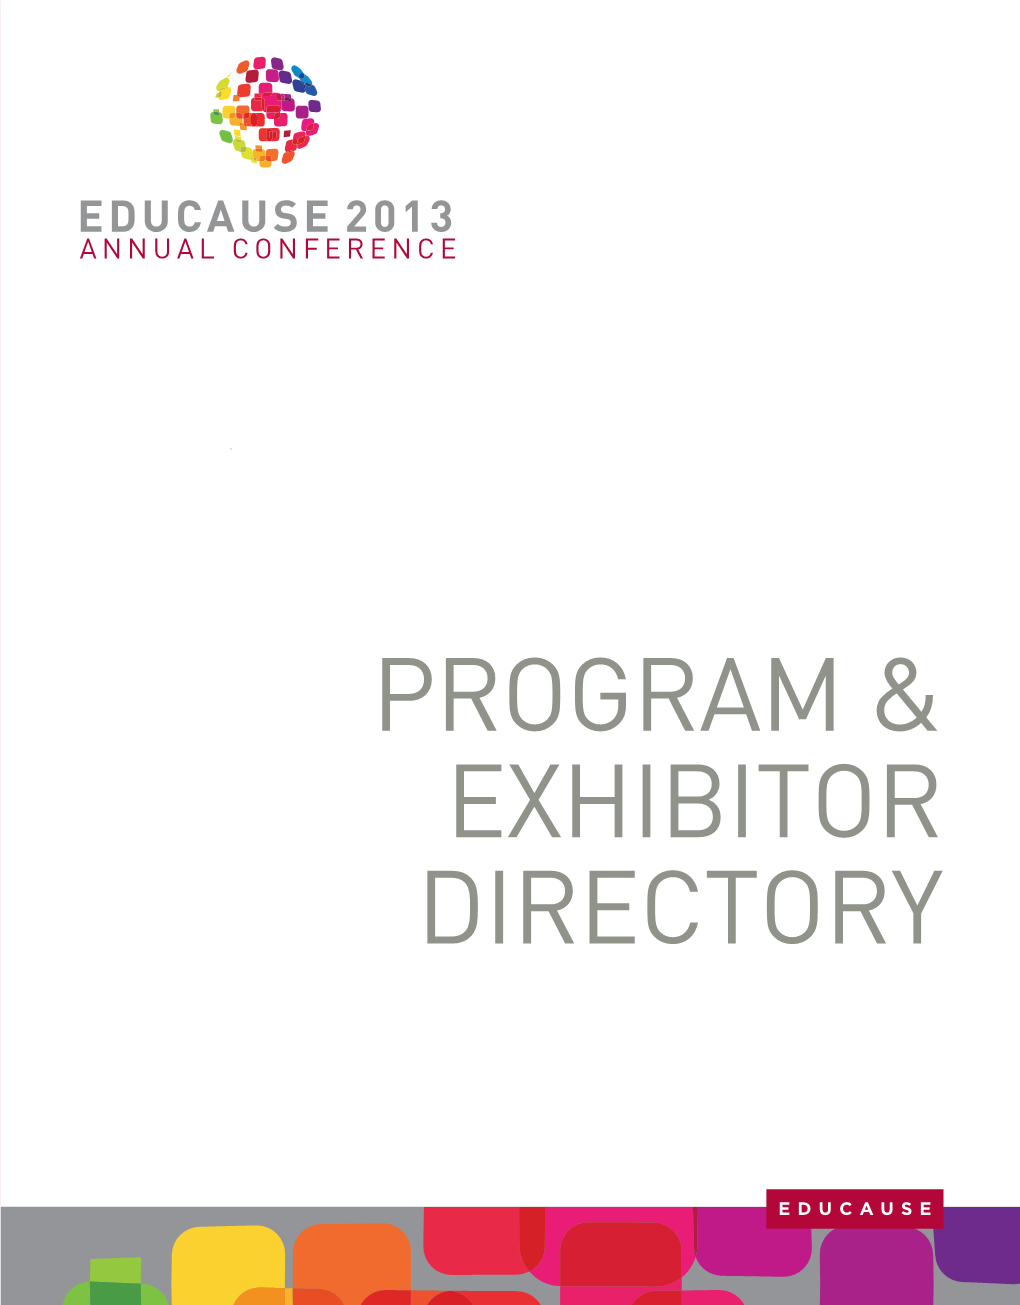 Program & Exhibitor Directory